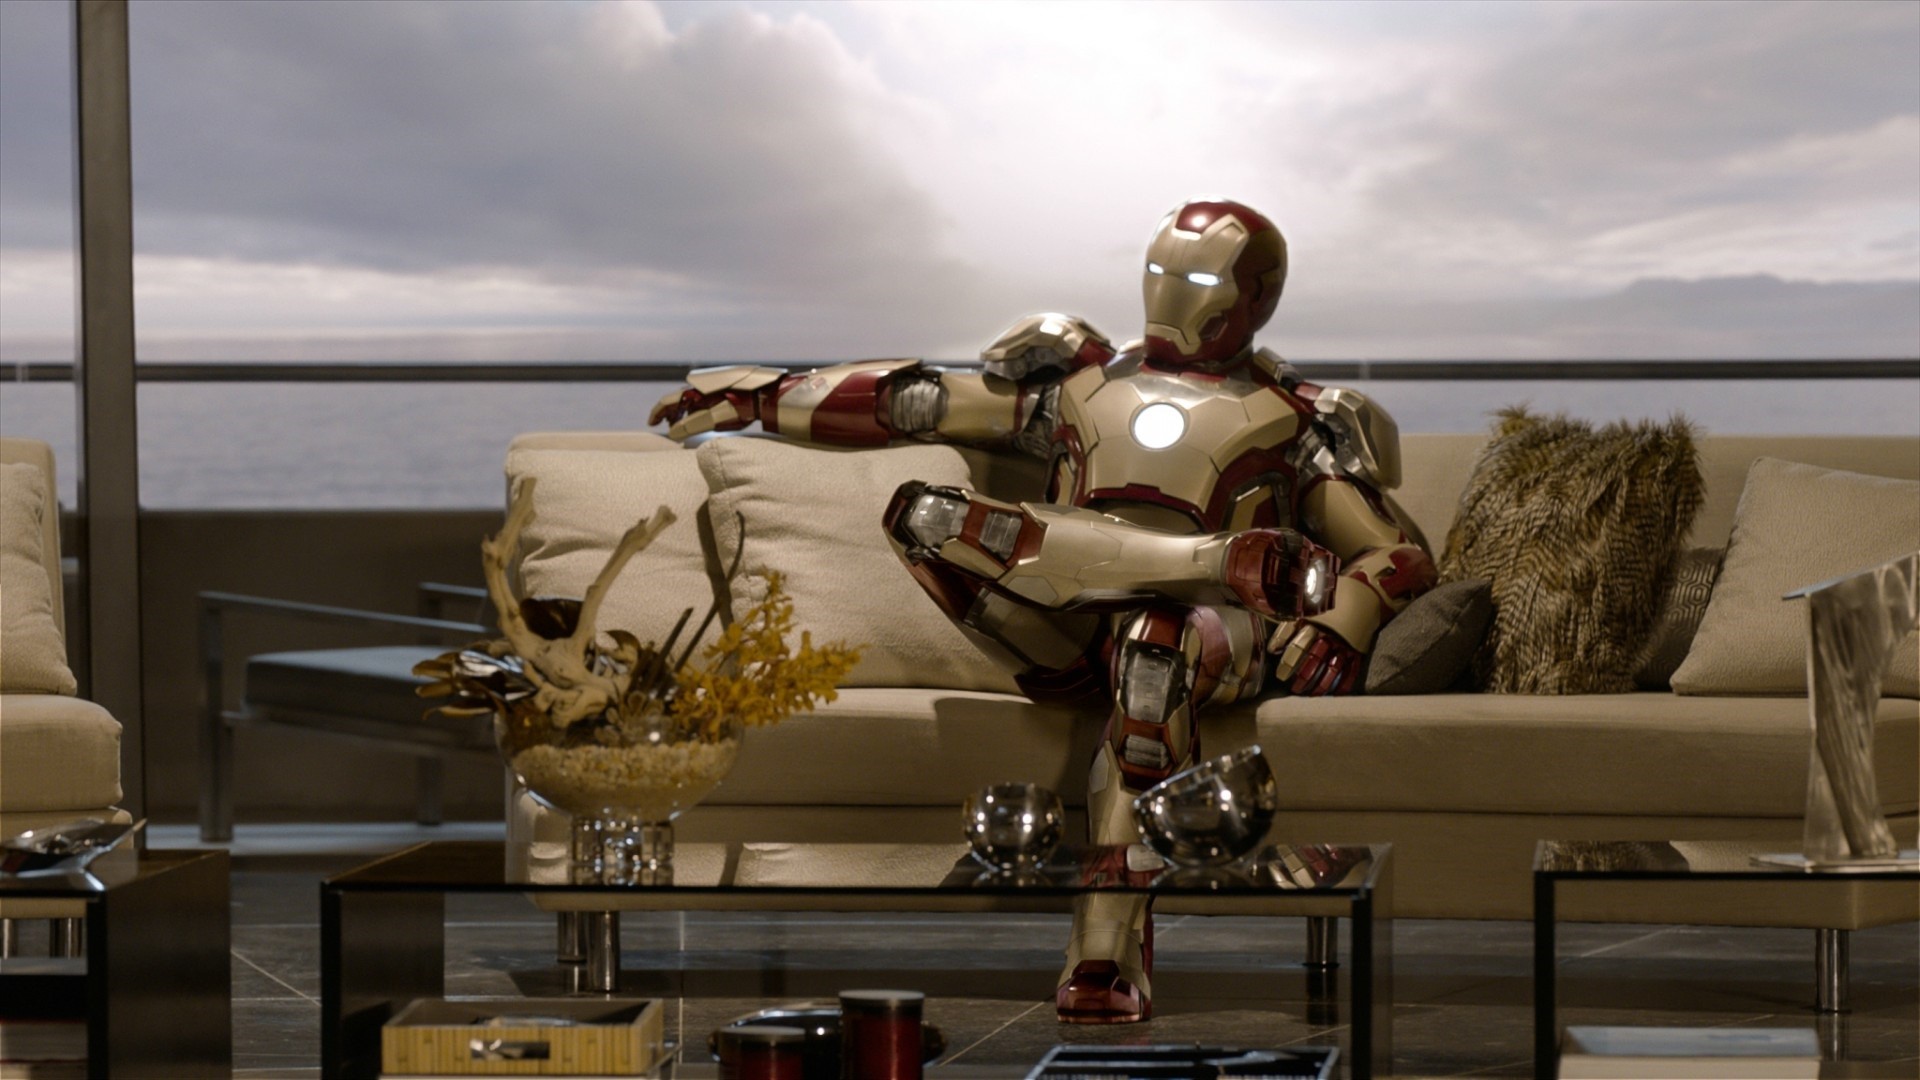 General 1920x1080 Iron Man Iron Man 3 couch Marvel Cinematic Universe movies superhero Marvel Comics